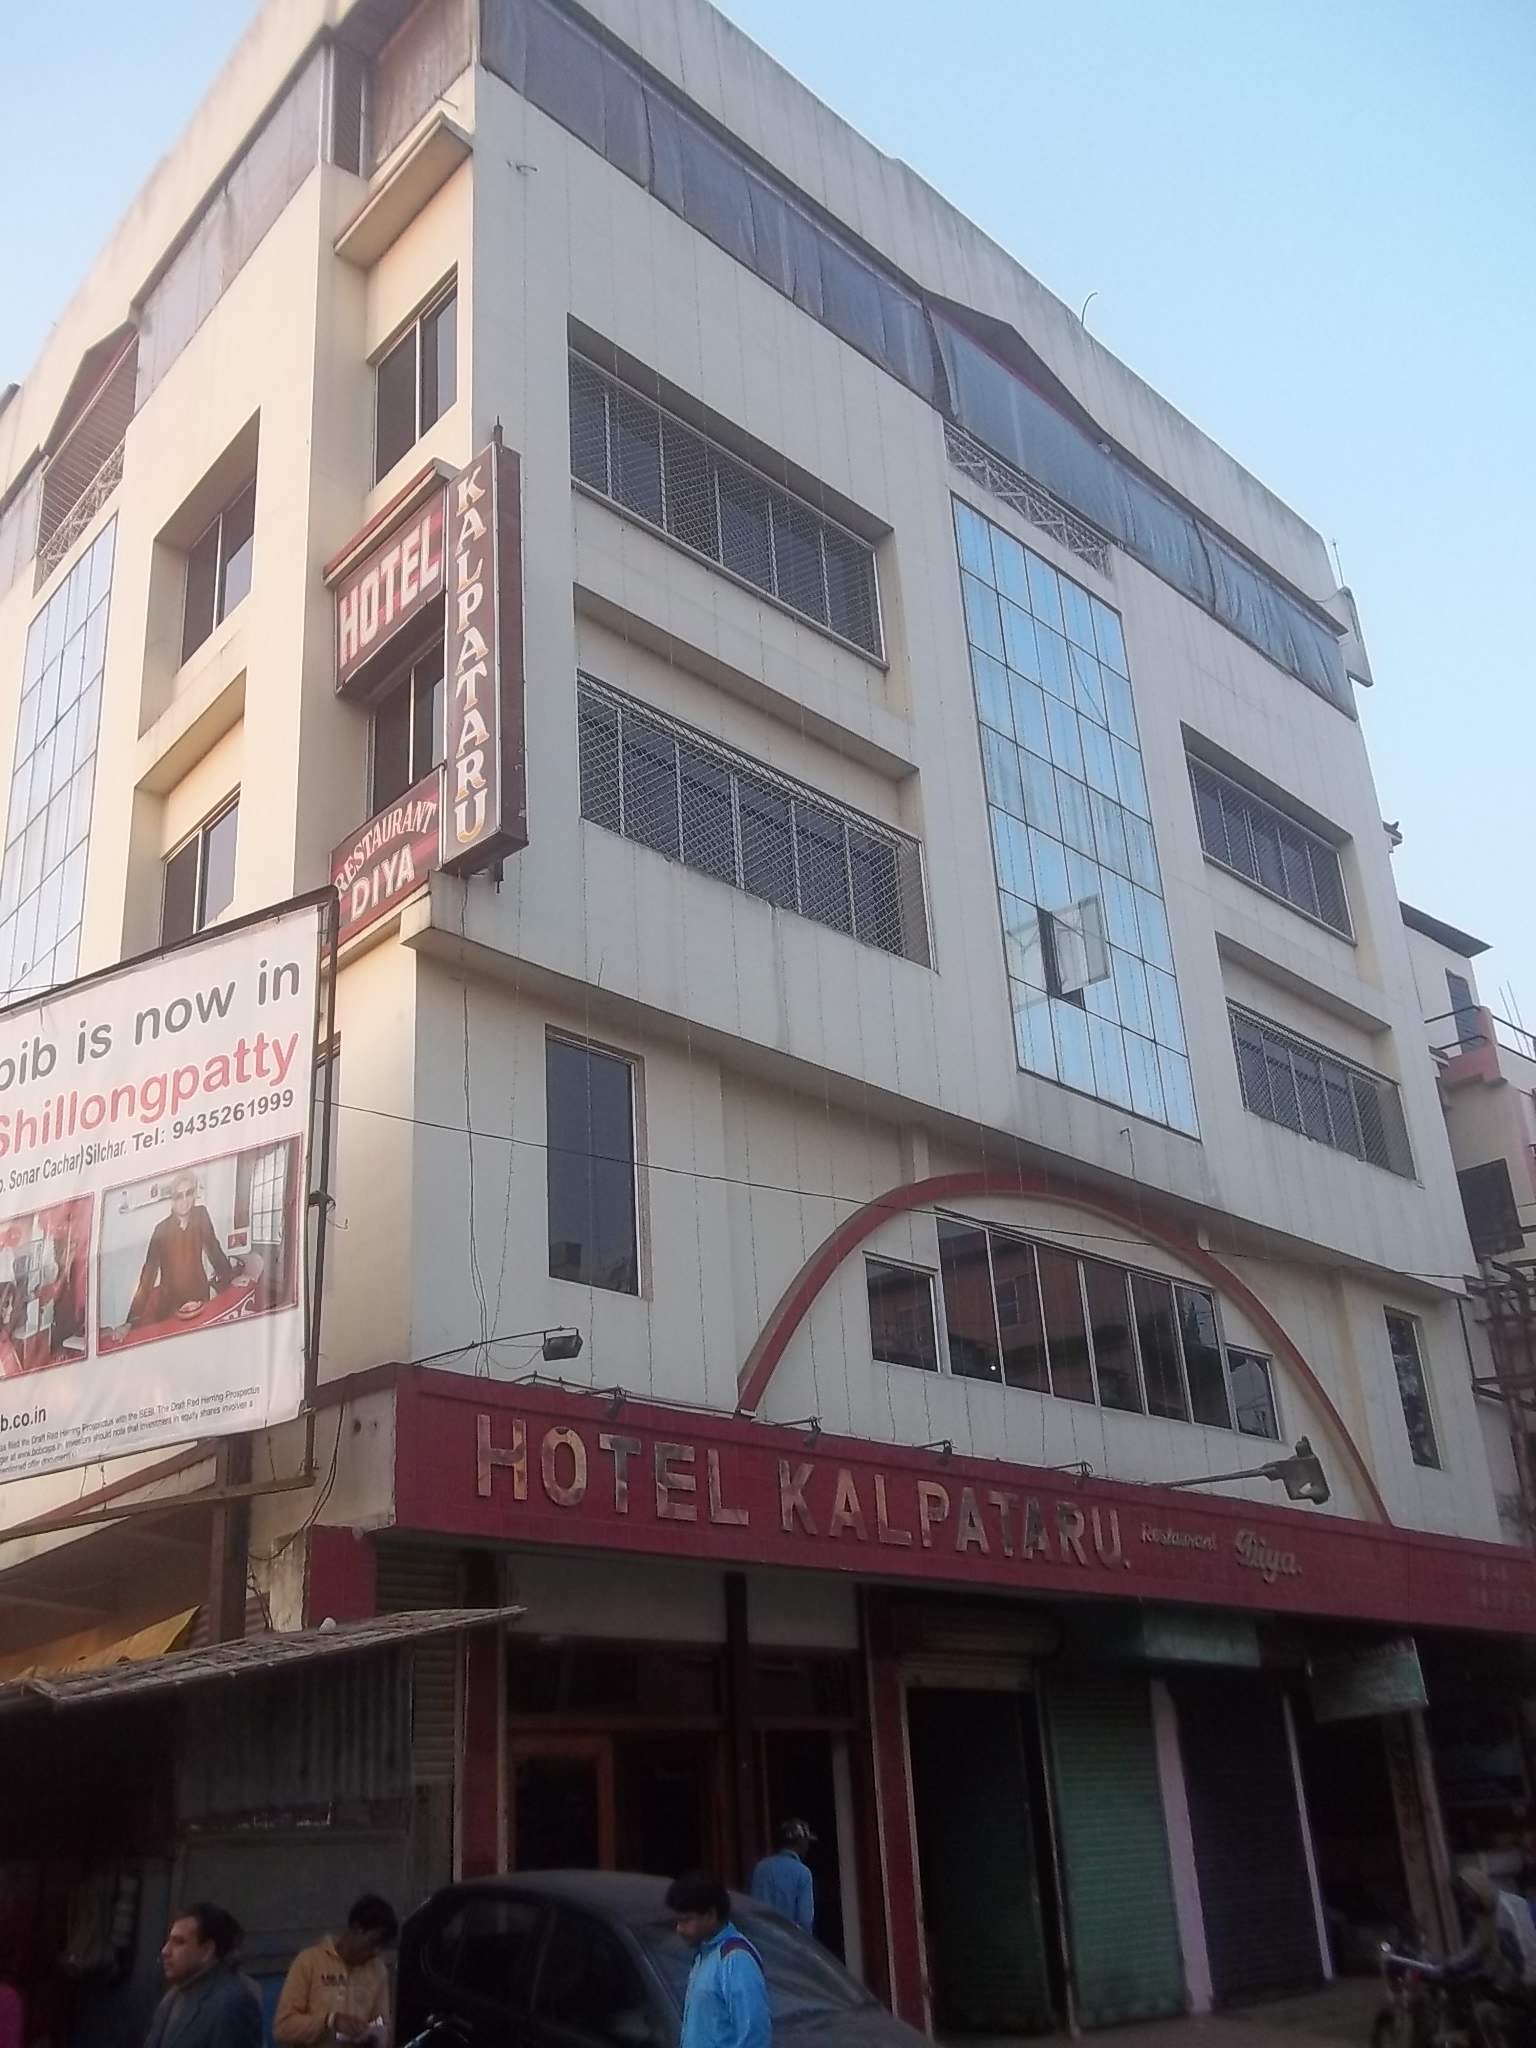 Hotel Kalpataru - Silchar